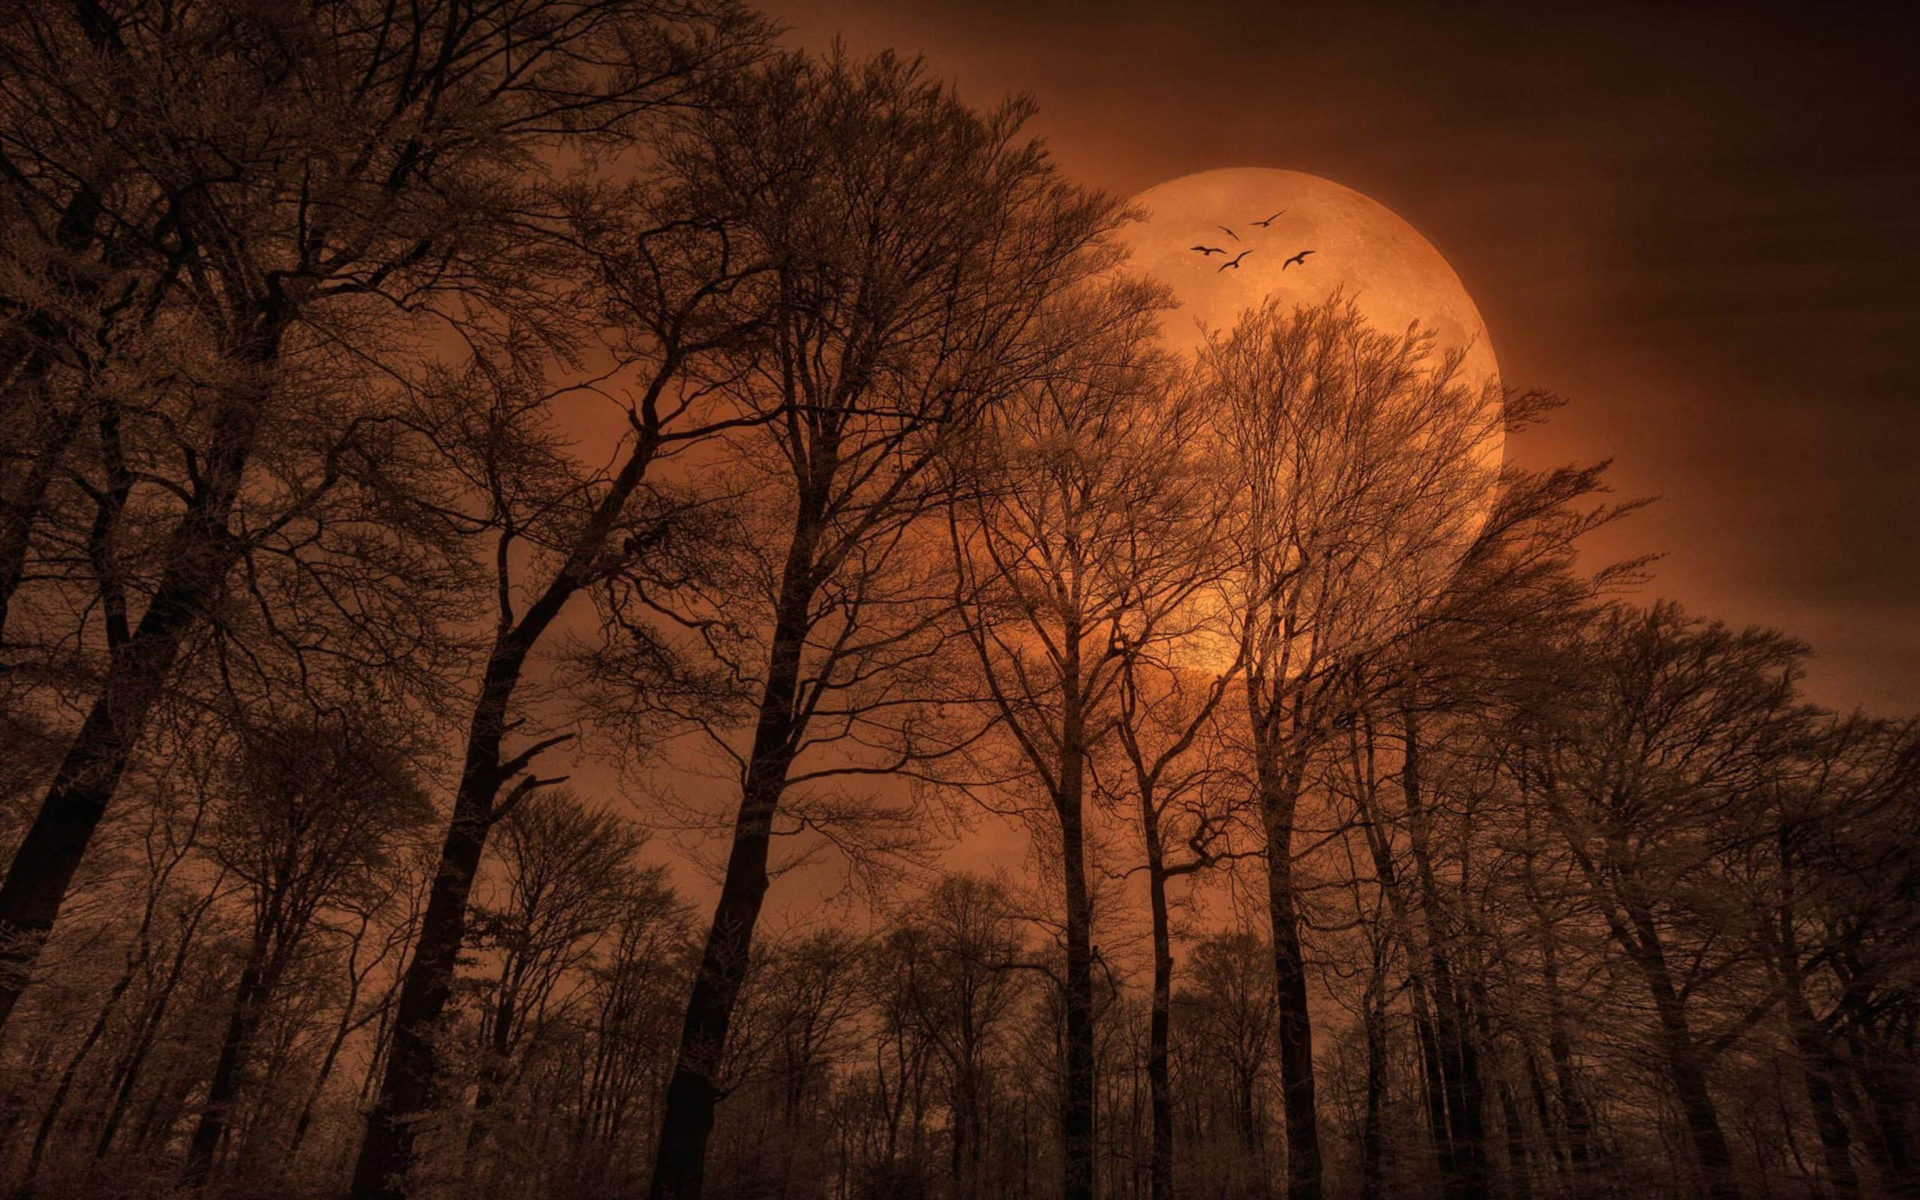 Beautiful Romantic Image Night Trees Branches Orange Sky Full Moon Free